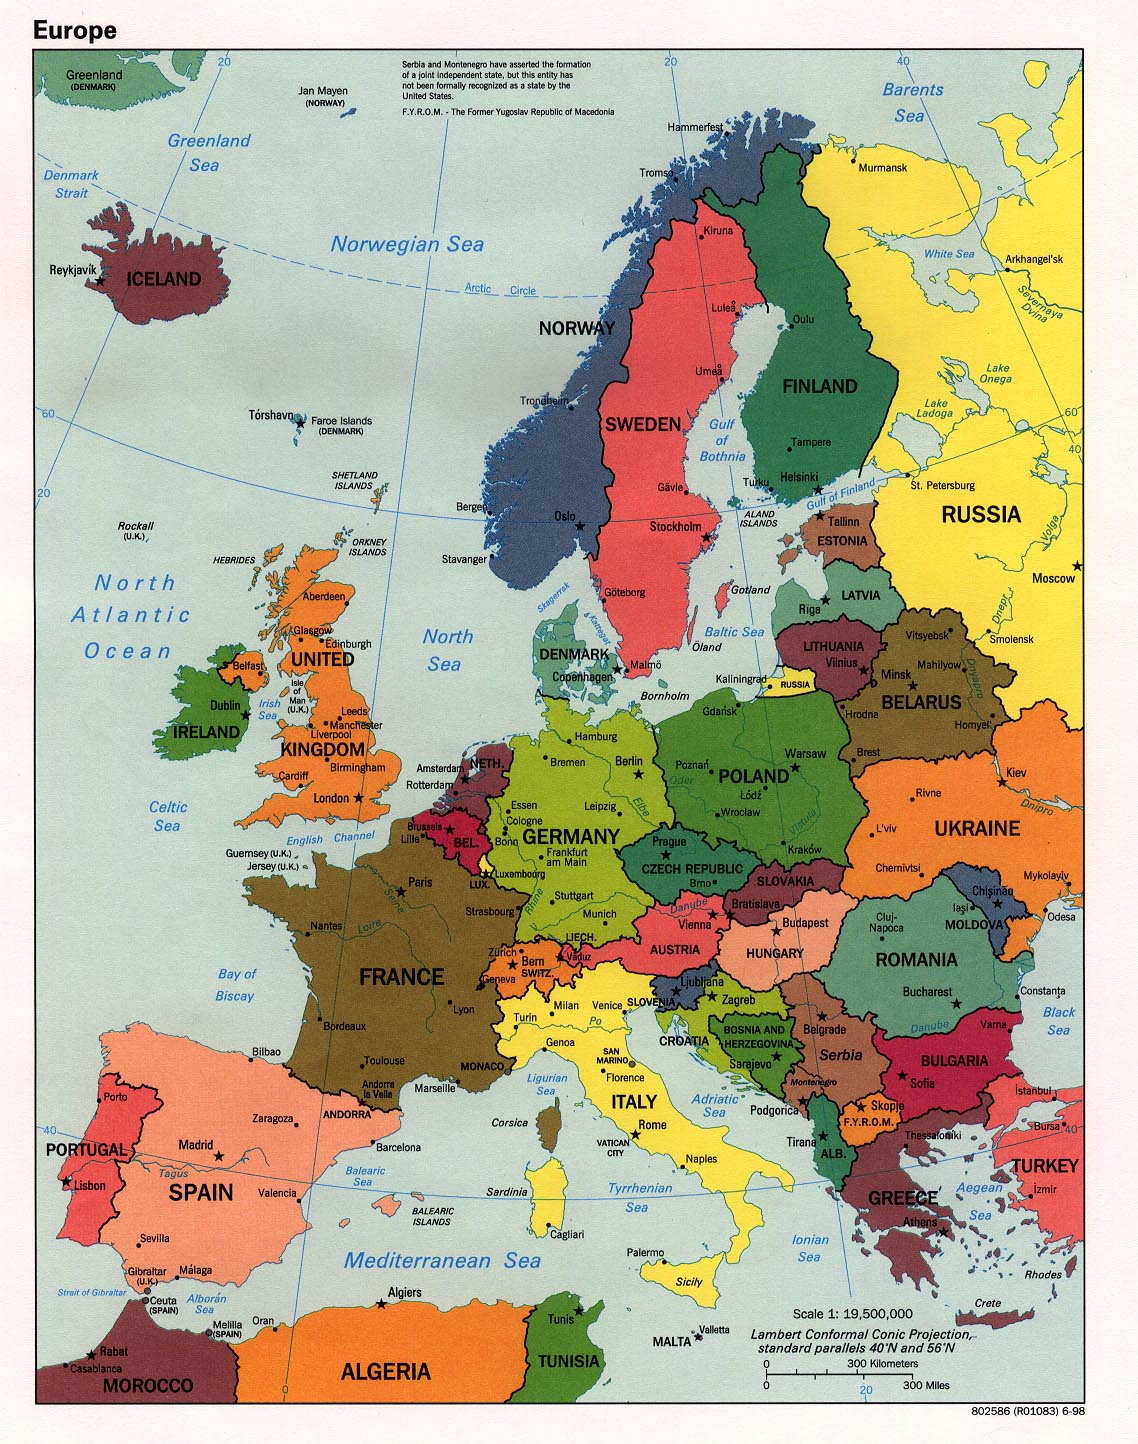 Western Europe: A Peninsula of Peninsulas (SS060201)